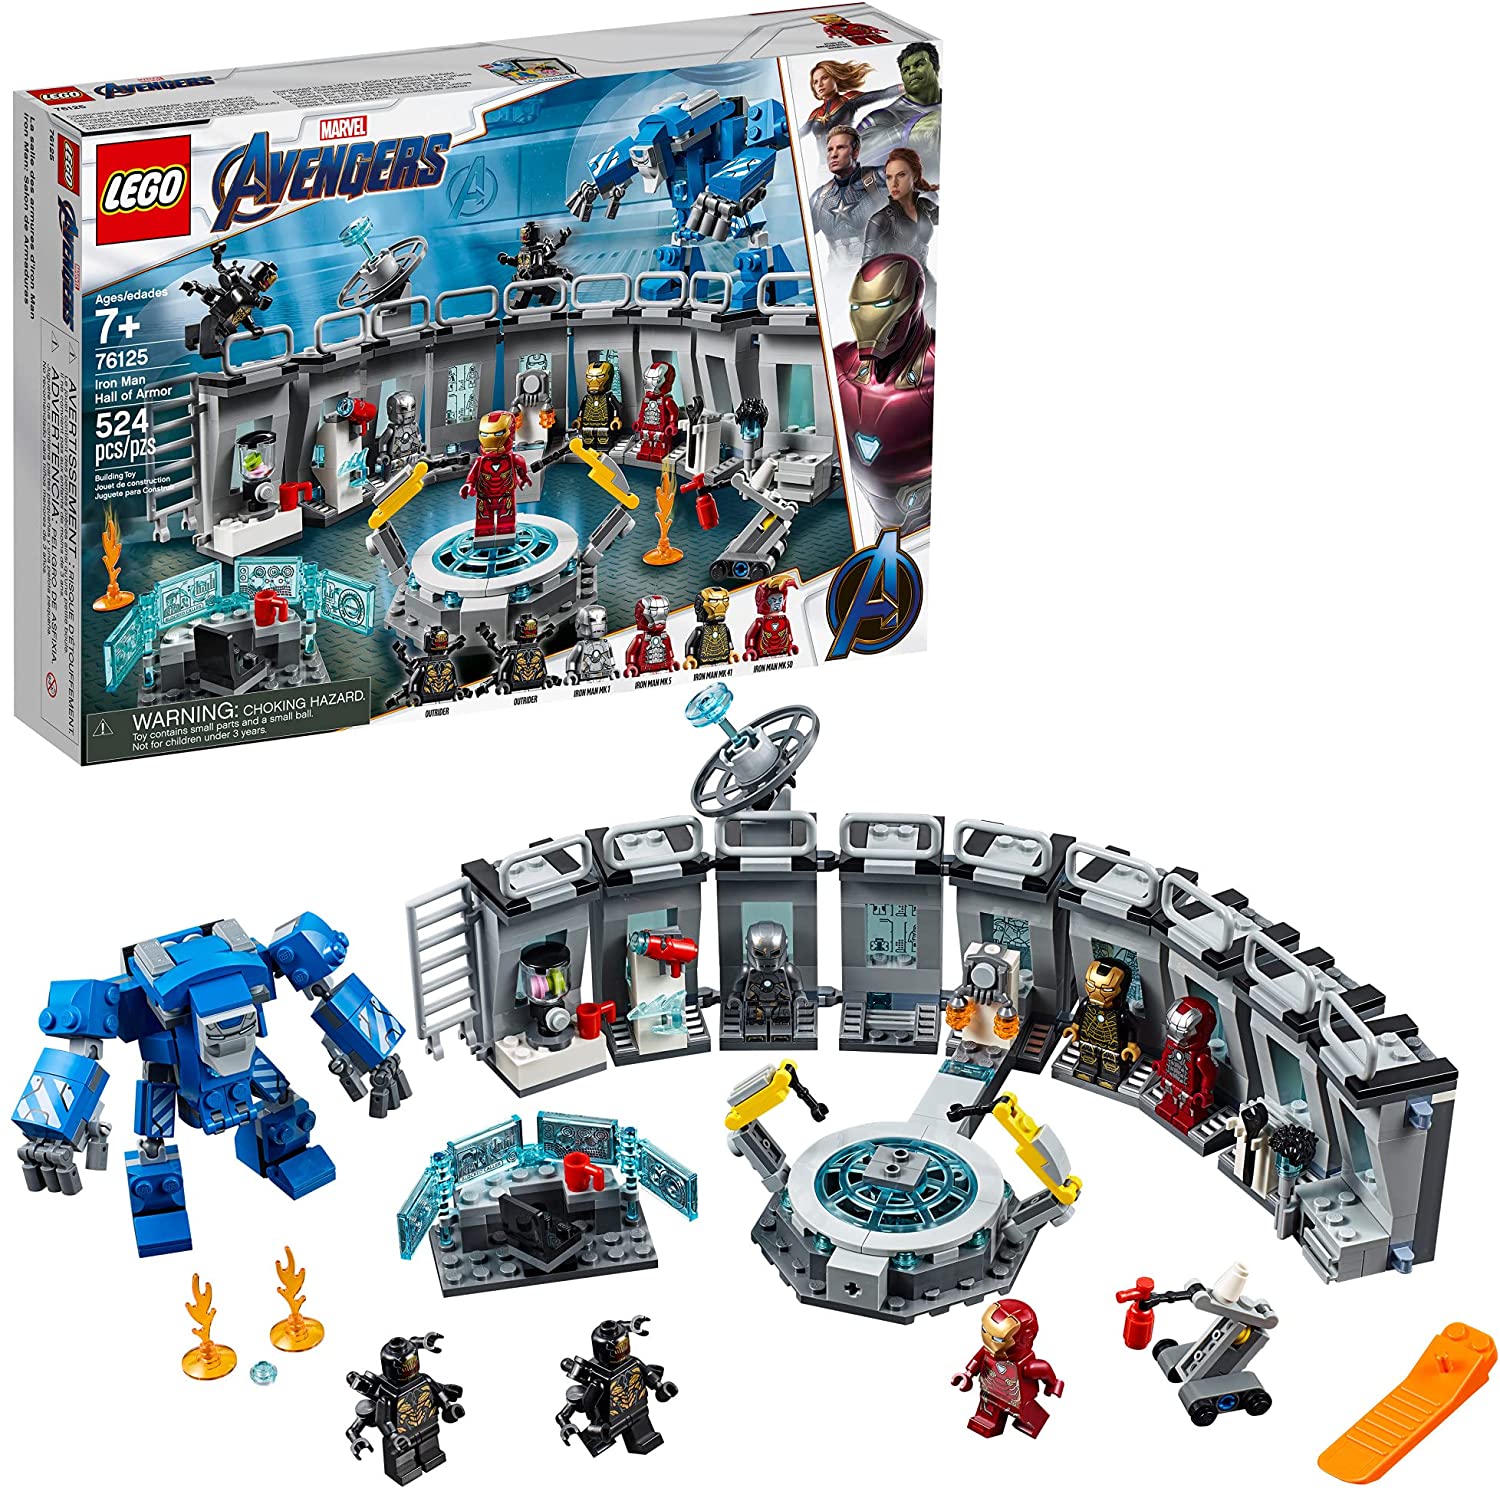 524 pcs-LEGO Marvel Avengers Iron Man Hall of Armor 76125 Building Kit Marvel Tony Stark Iron Man Suit Action Figures for $47.99